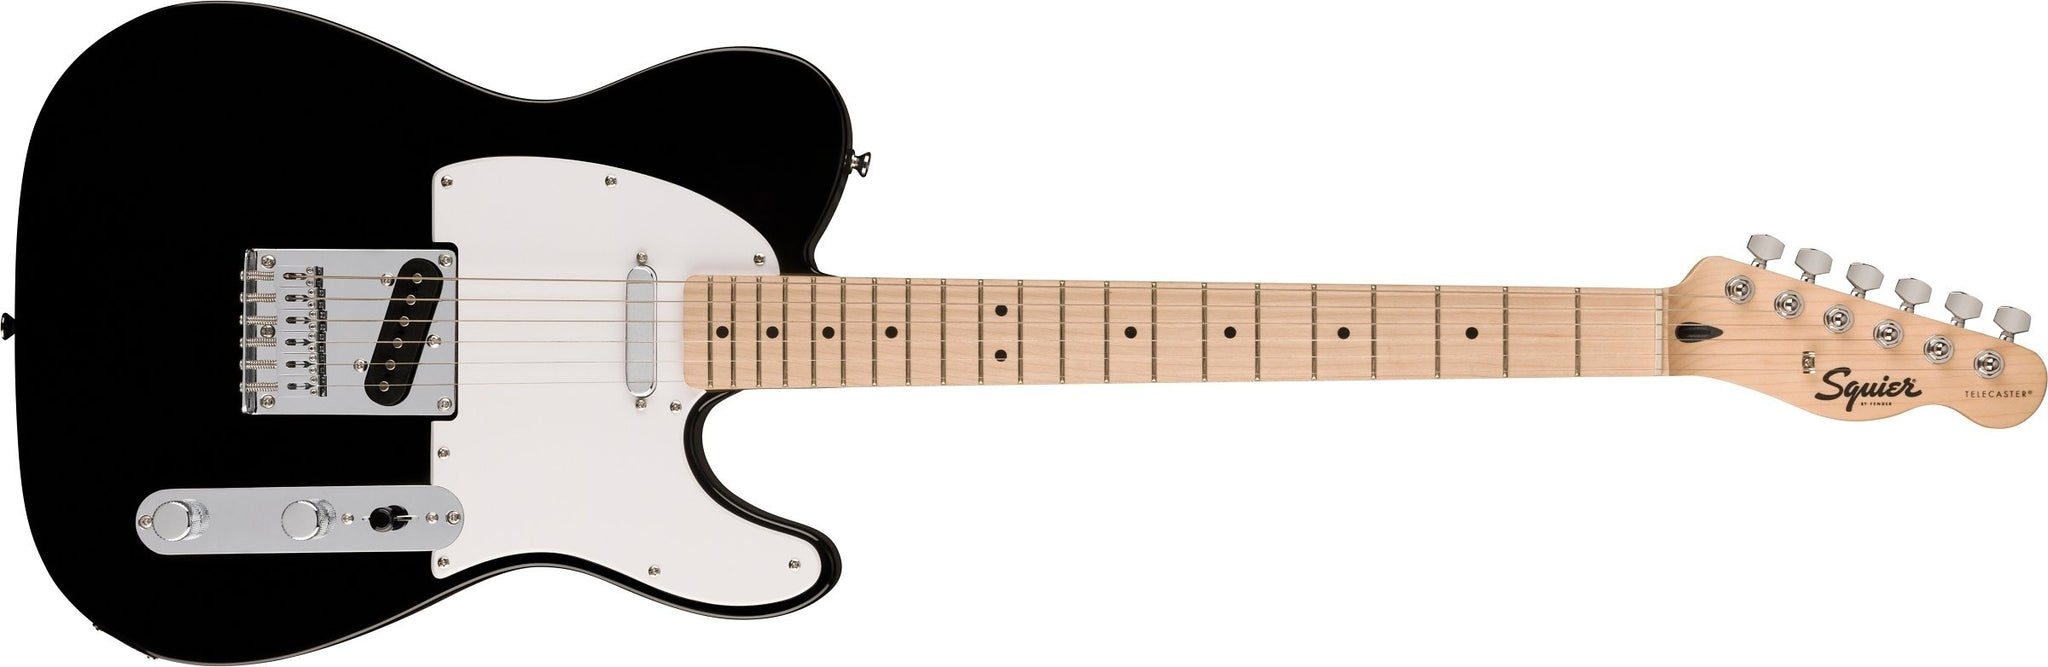 FENDER 0373452506 Squier Sonic Telecaster Electric Guitar (Black)